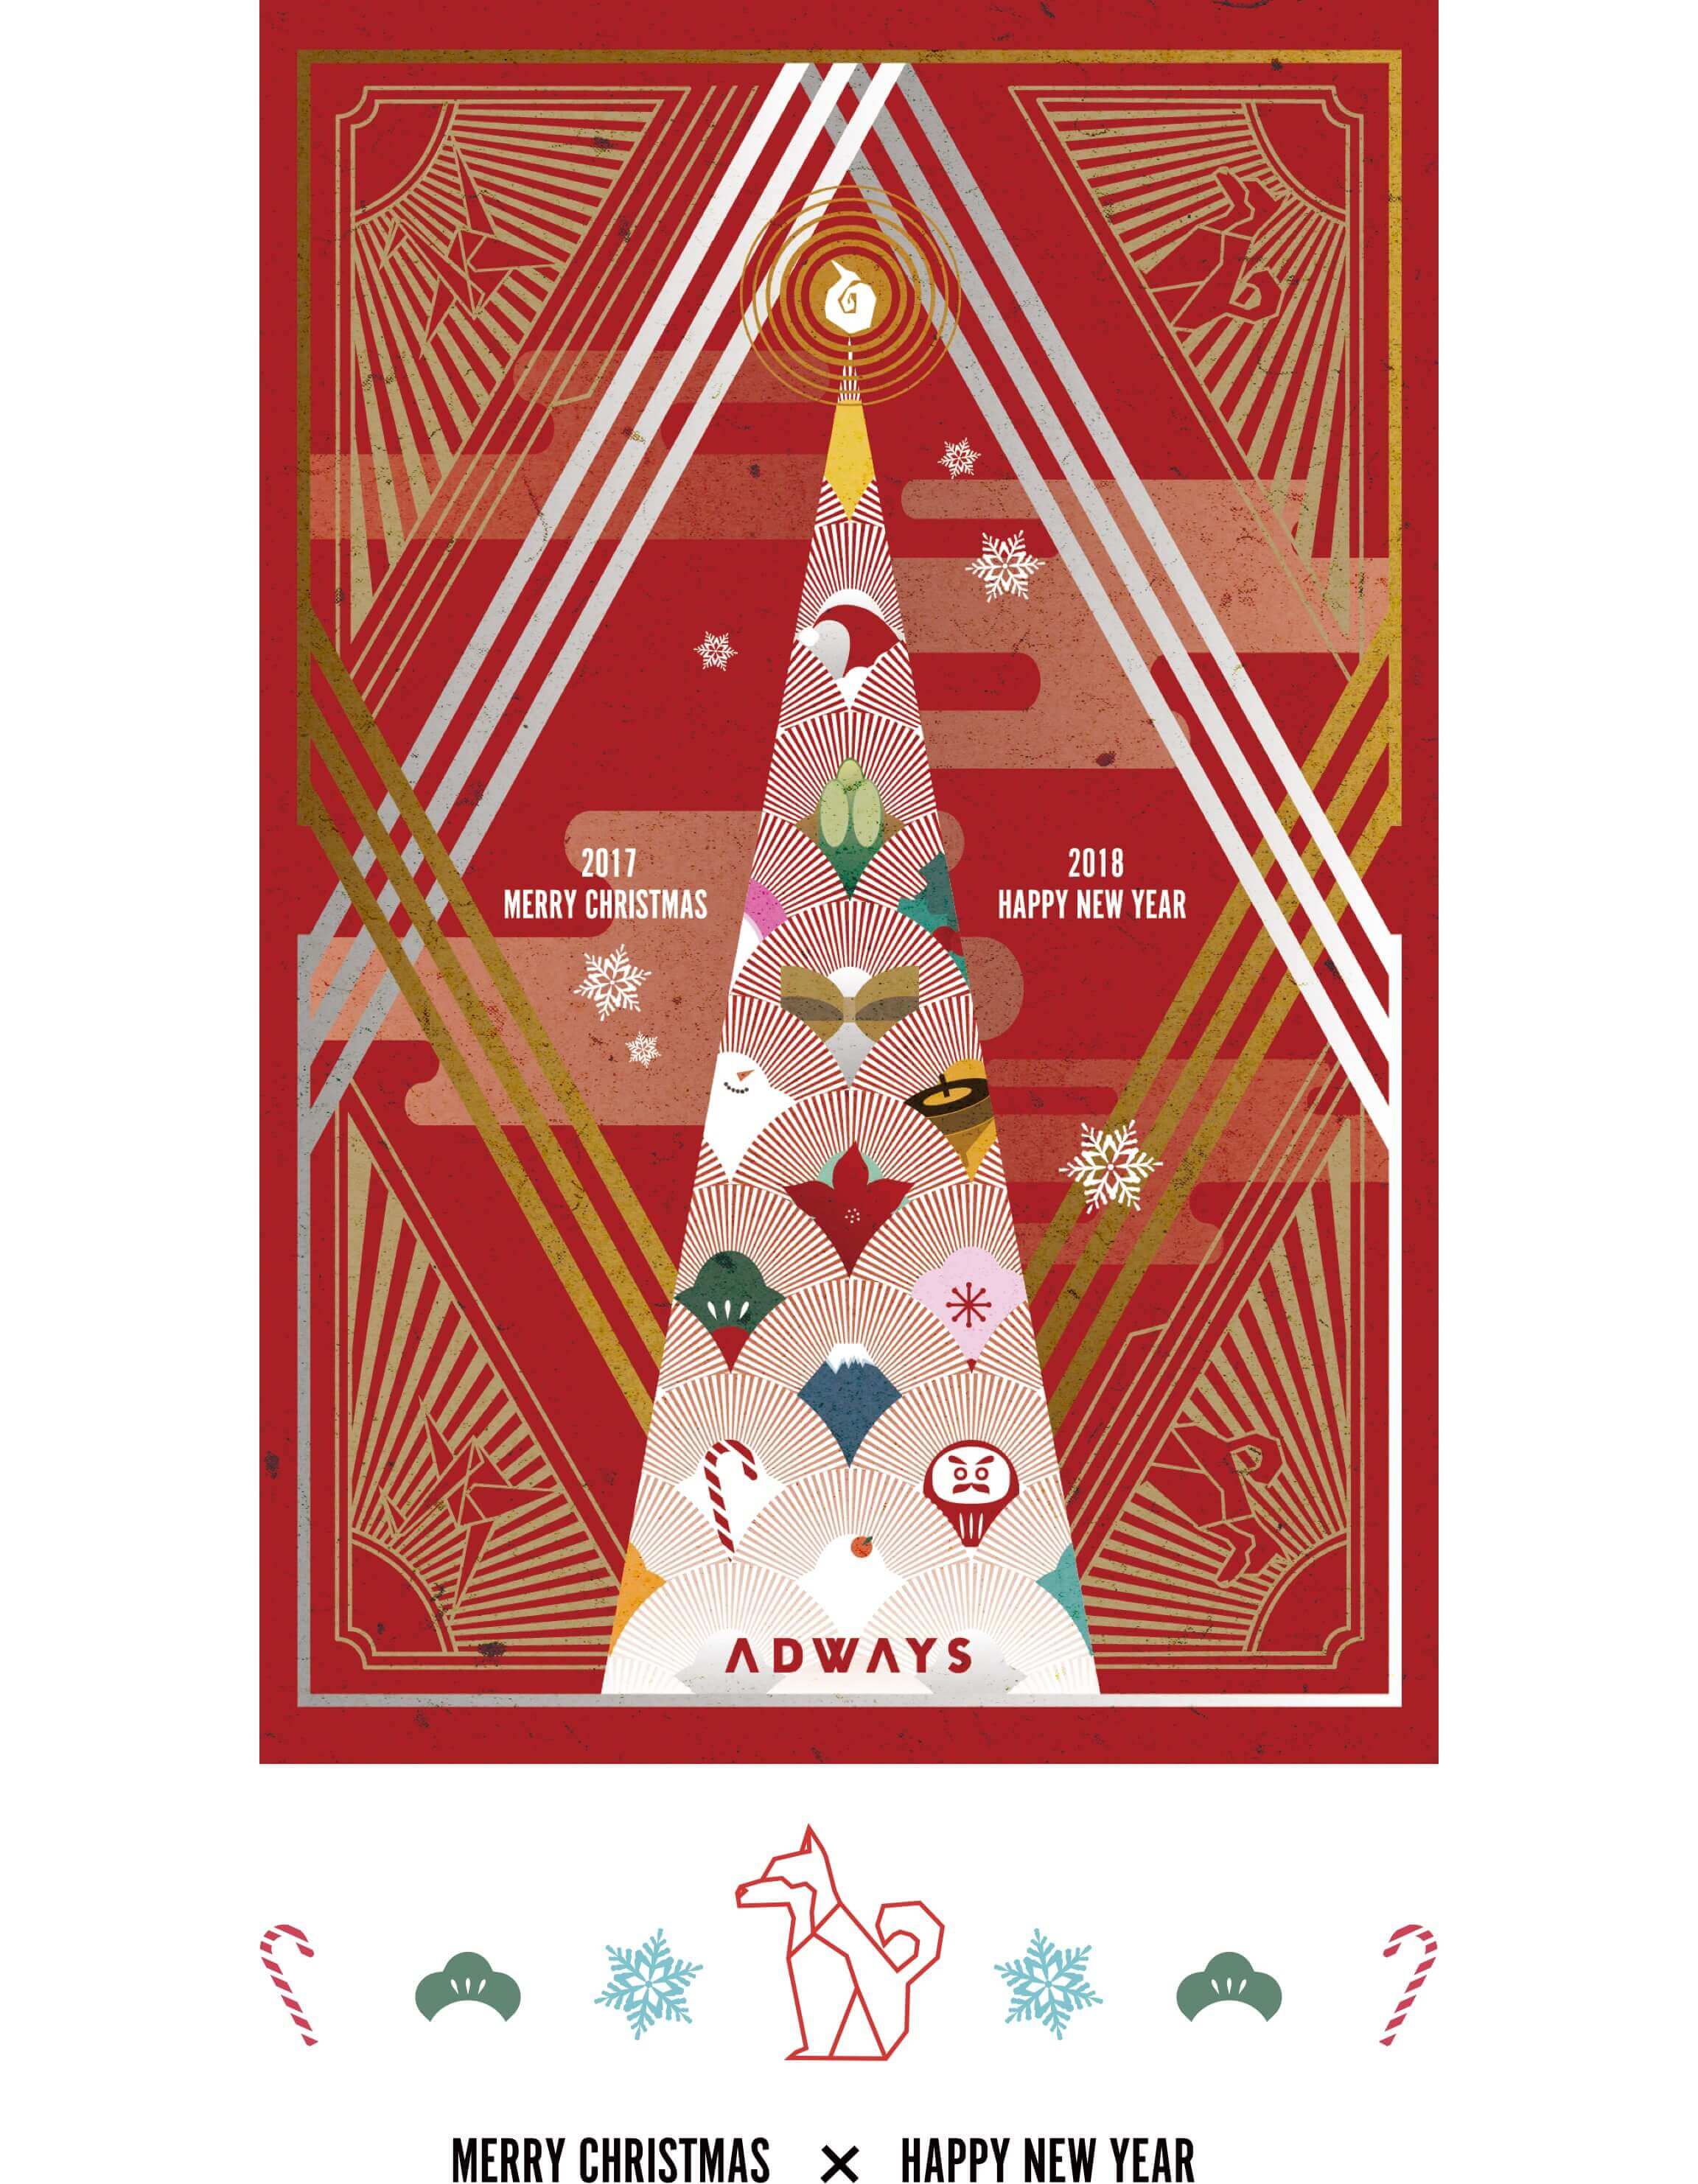 2017 Christmas & 2018 New Year Card Image